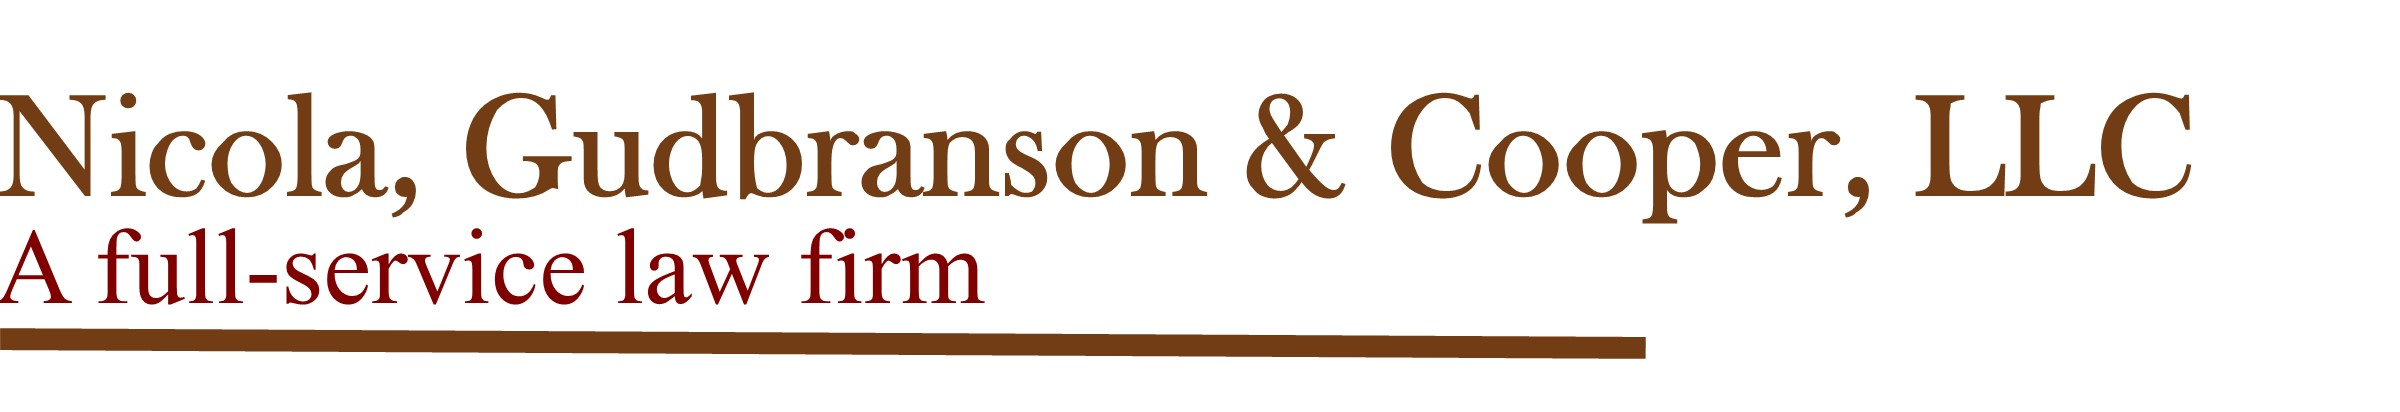 Nicola, Gudbranson & Cooper, LLC